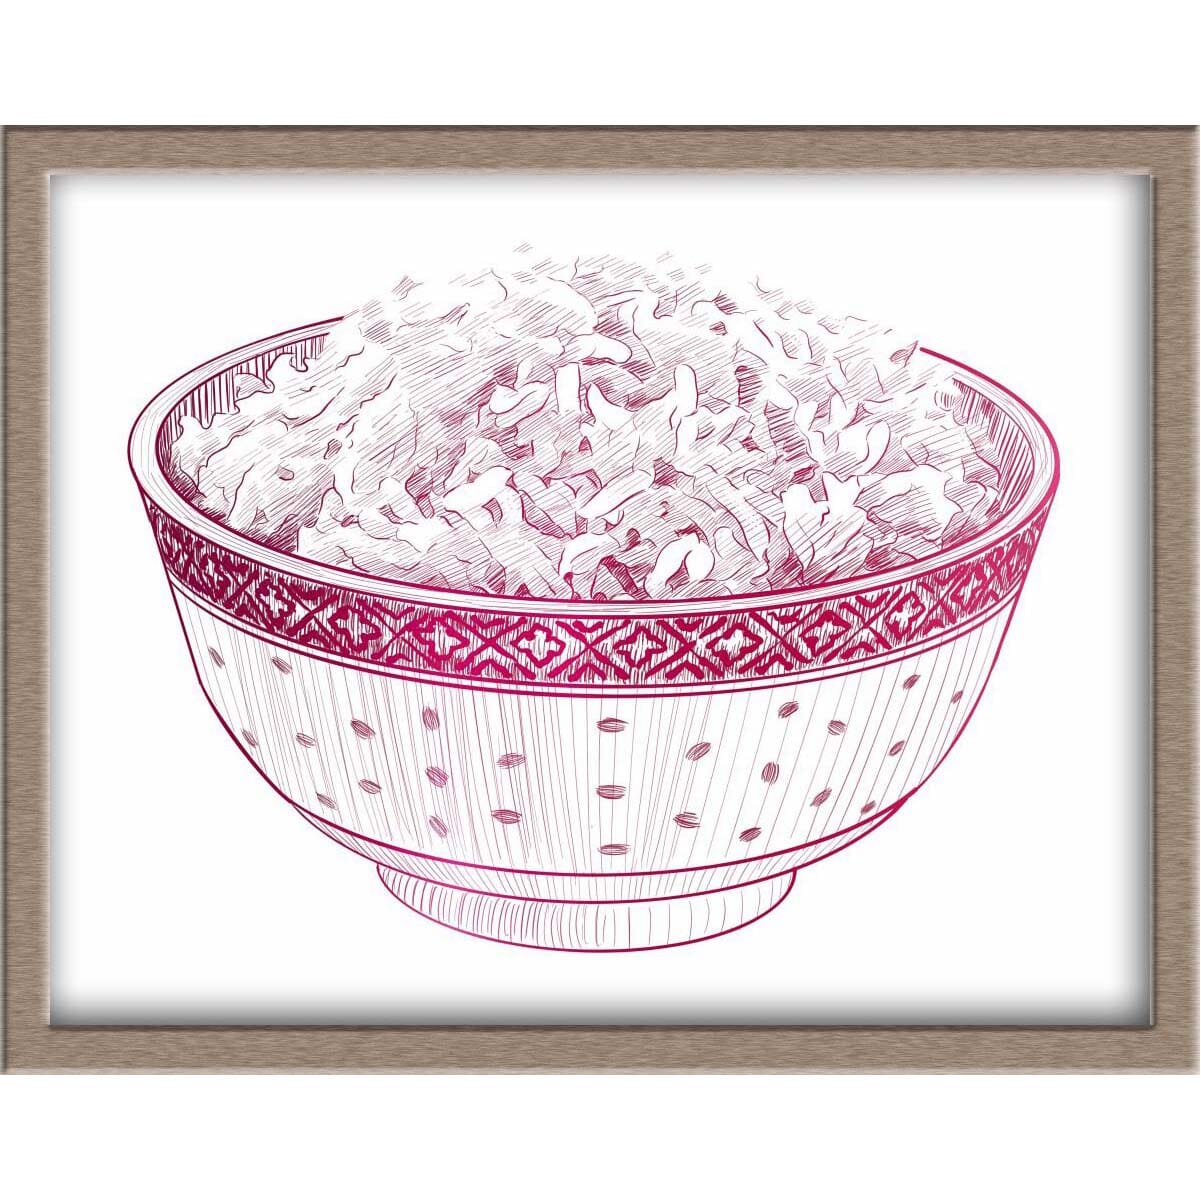 Bowl of Rice Foiled Print Posters, Prints, & Visual Artwork JoyousJoyfulJoyness 